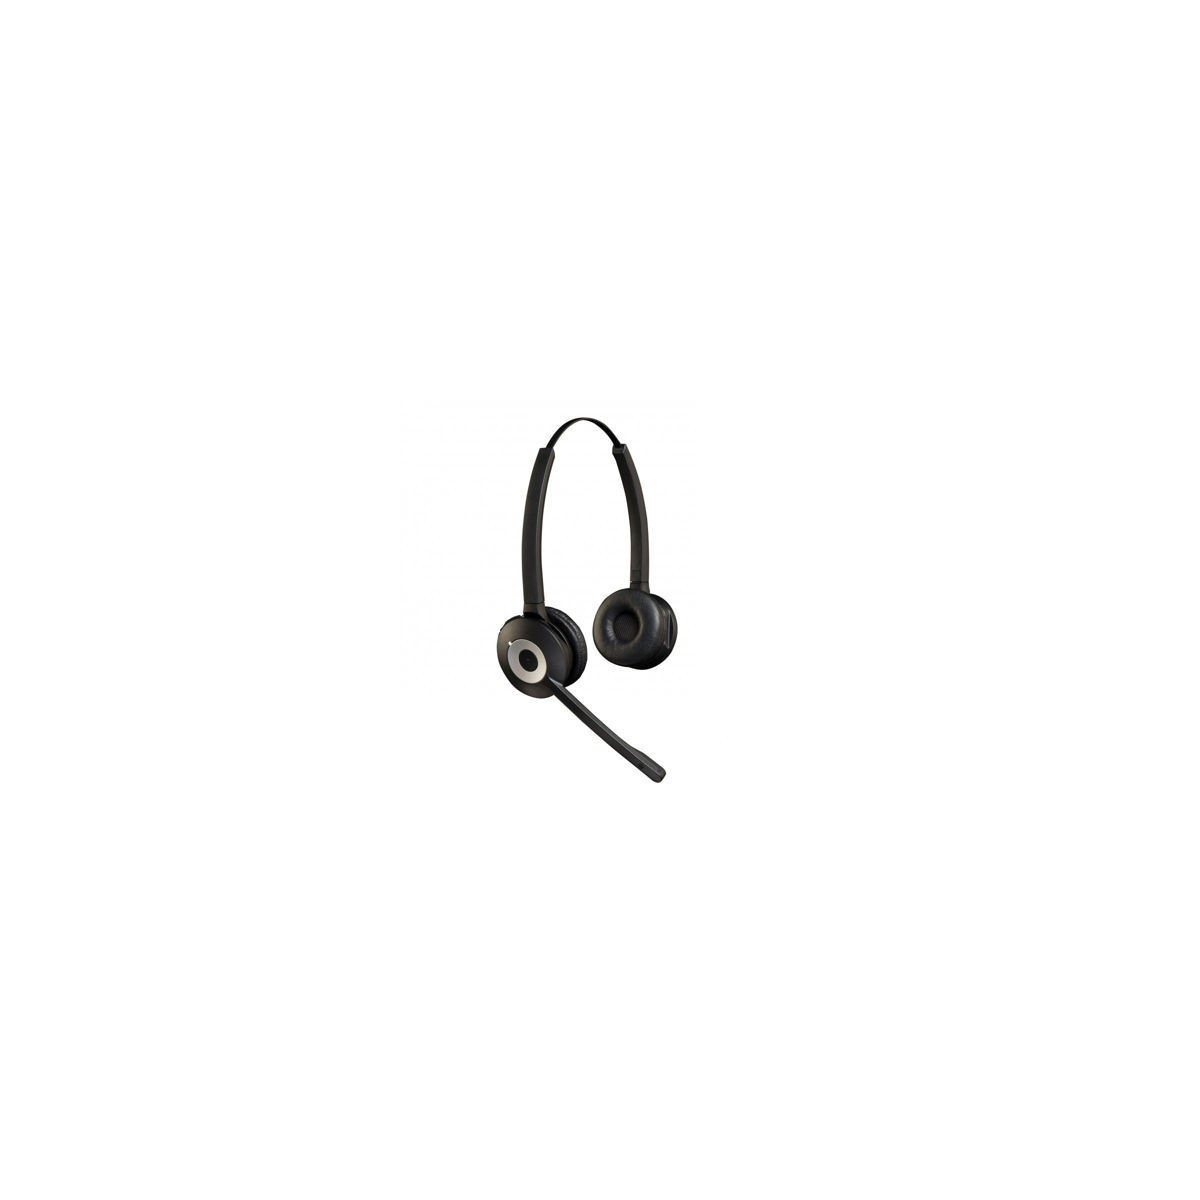 Jabra 14401-16 - Headset - Head-band - Office/Call center - Black - Monaural - China